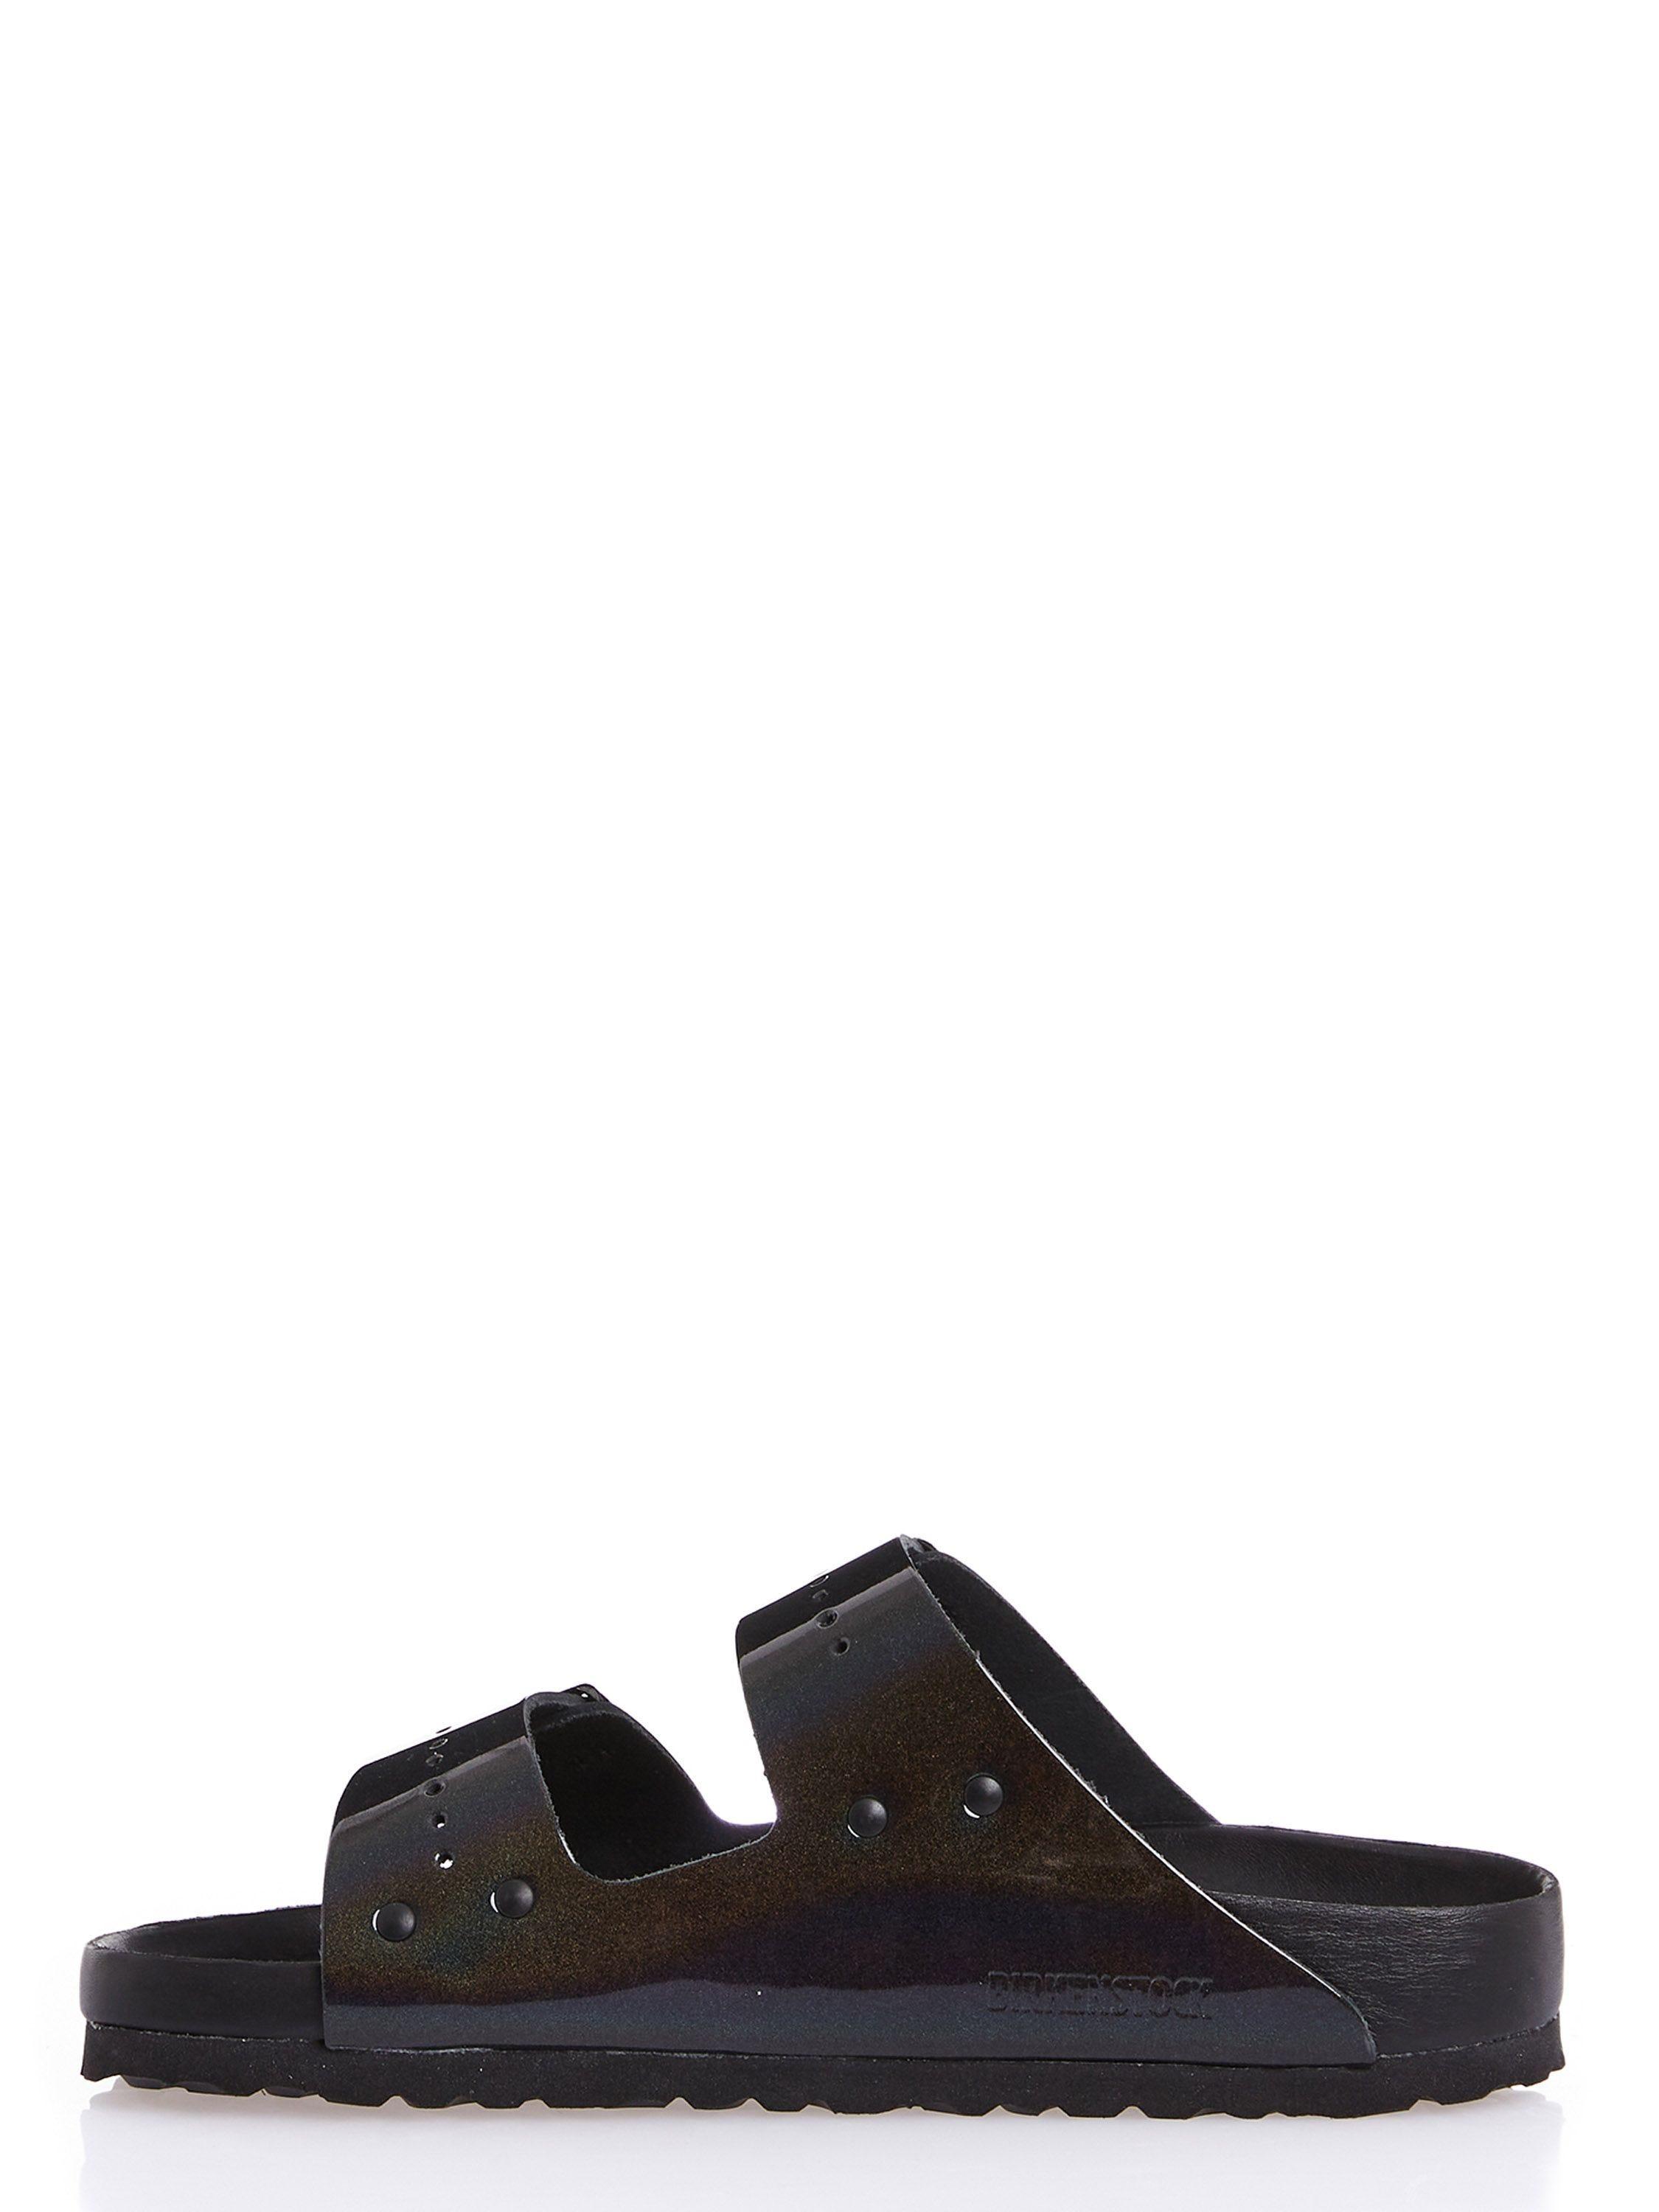 Rick Owens X Birkenstock Leather Black Arizona Iridescent Sandals | Lyst